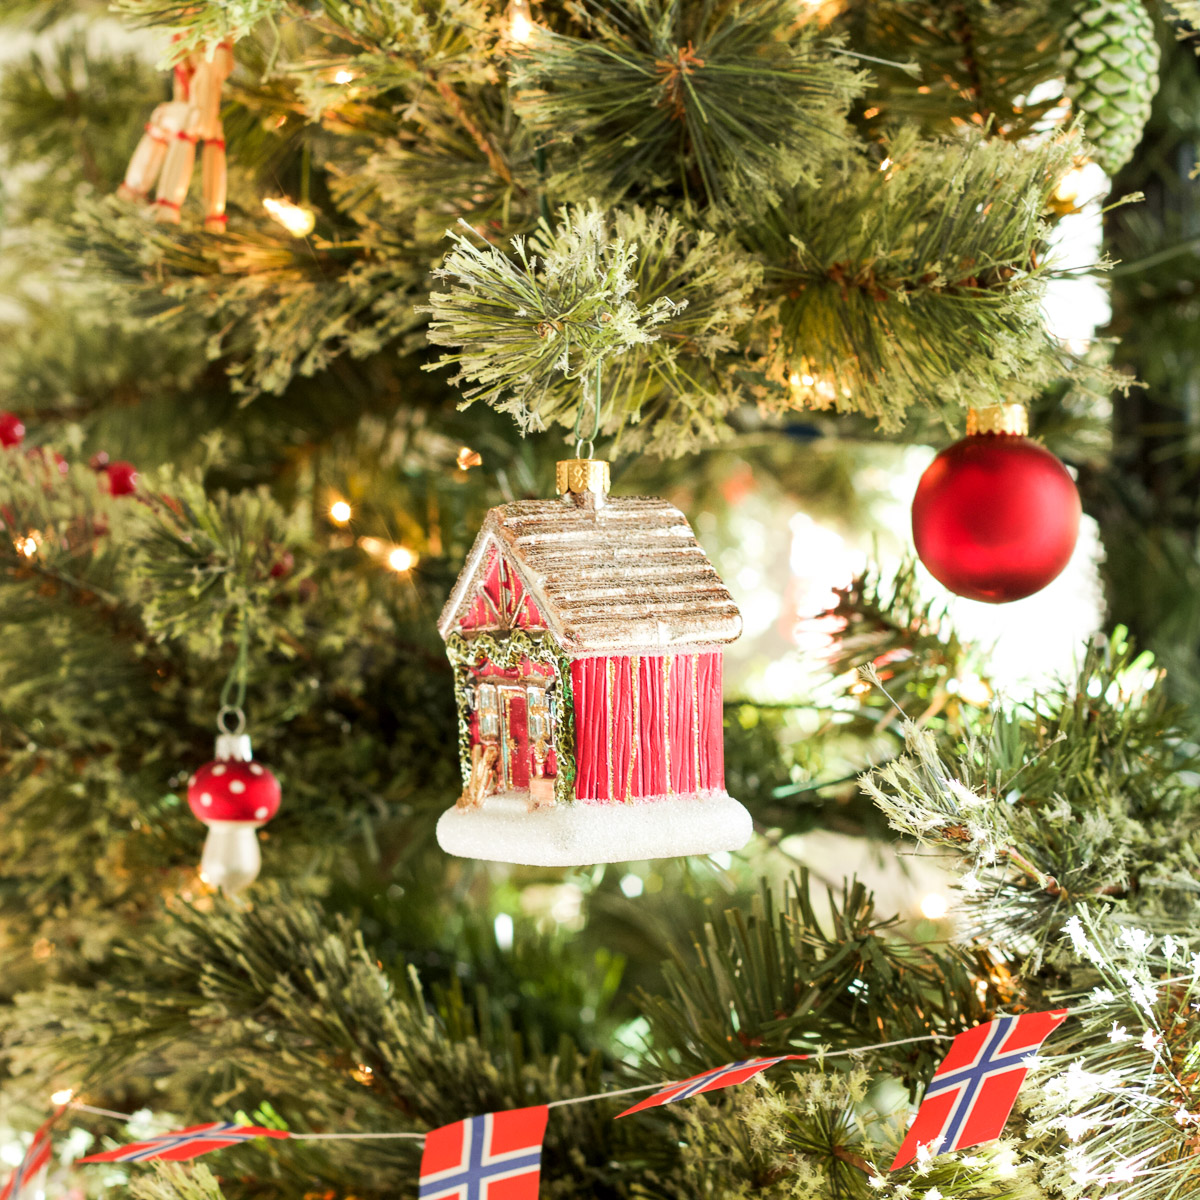 A Scandinavian Christmas tree